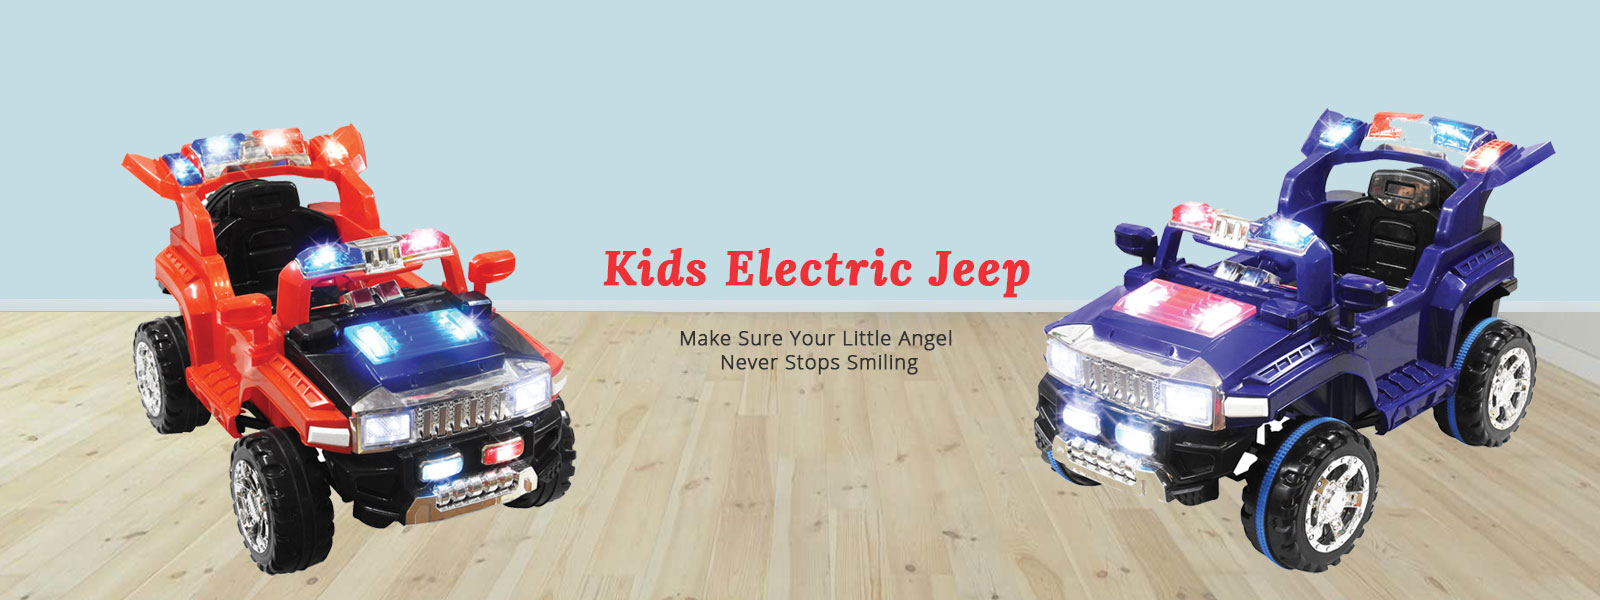 Kids Electric Jeep Manufacturers in Delhi